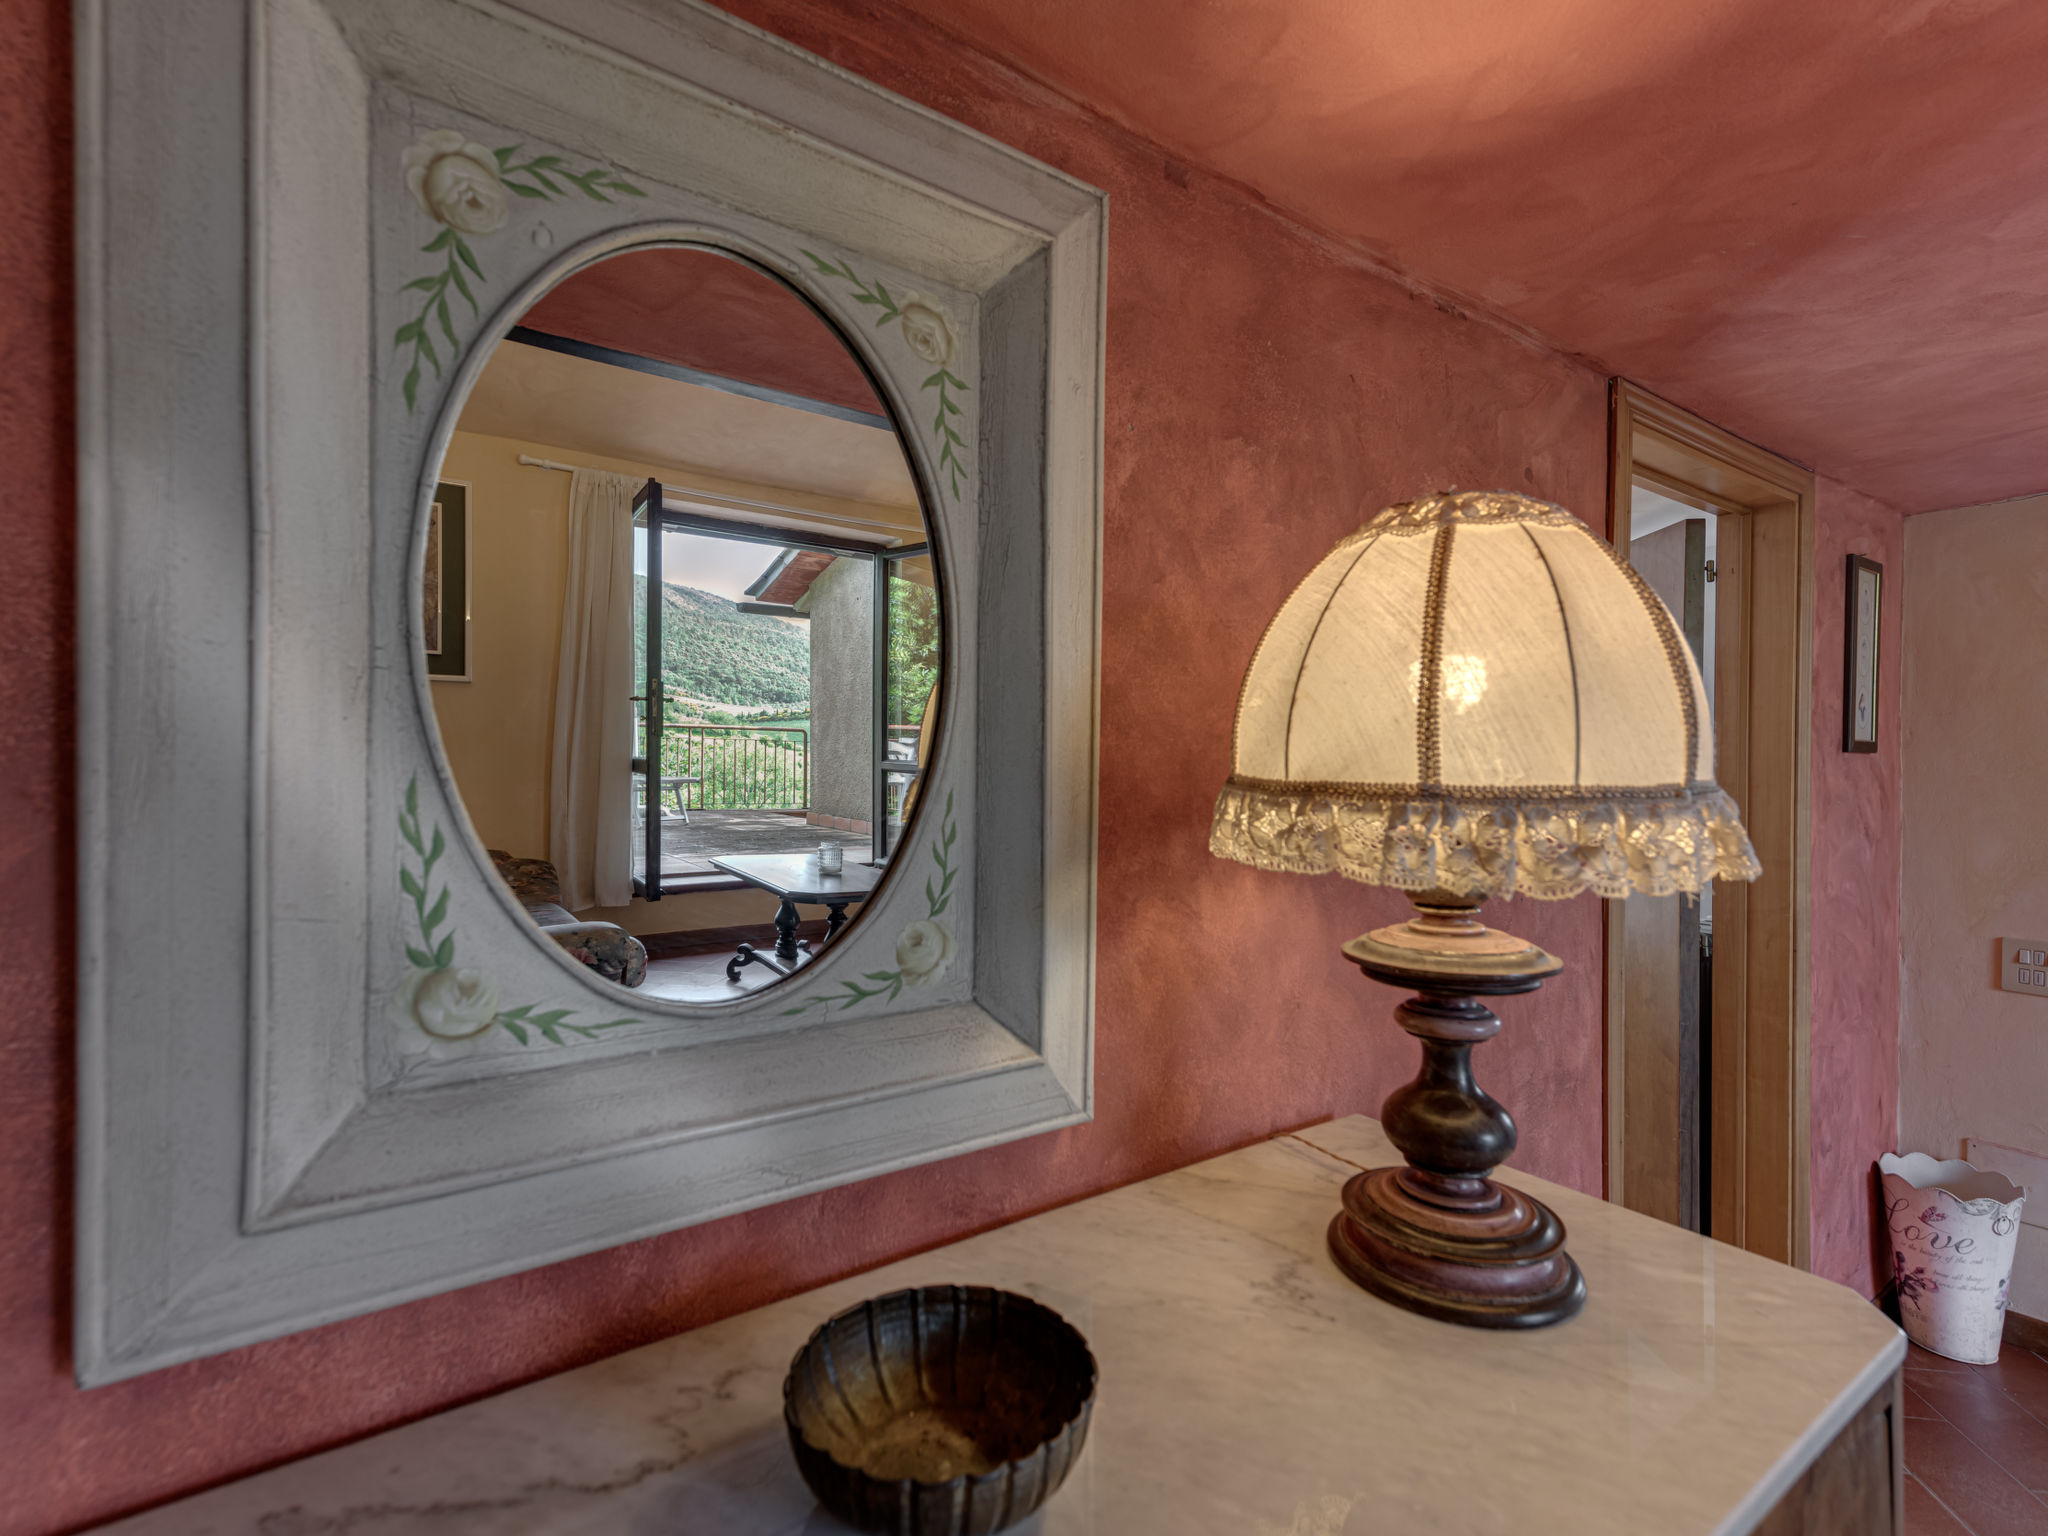 Foto 15 - Casa con 4 camere da letto a San Gimignano con piscina e giardino